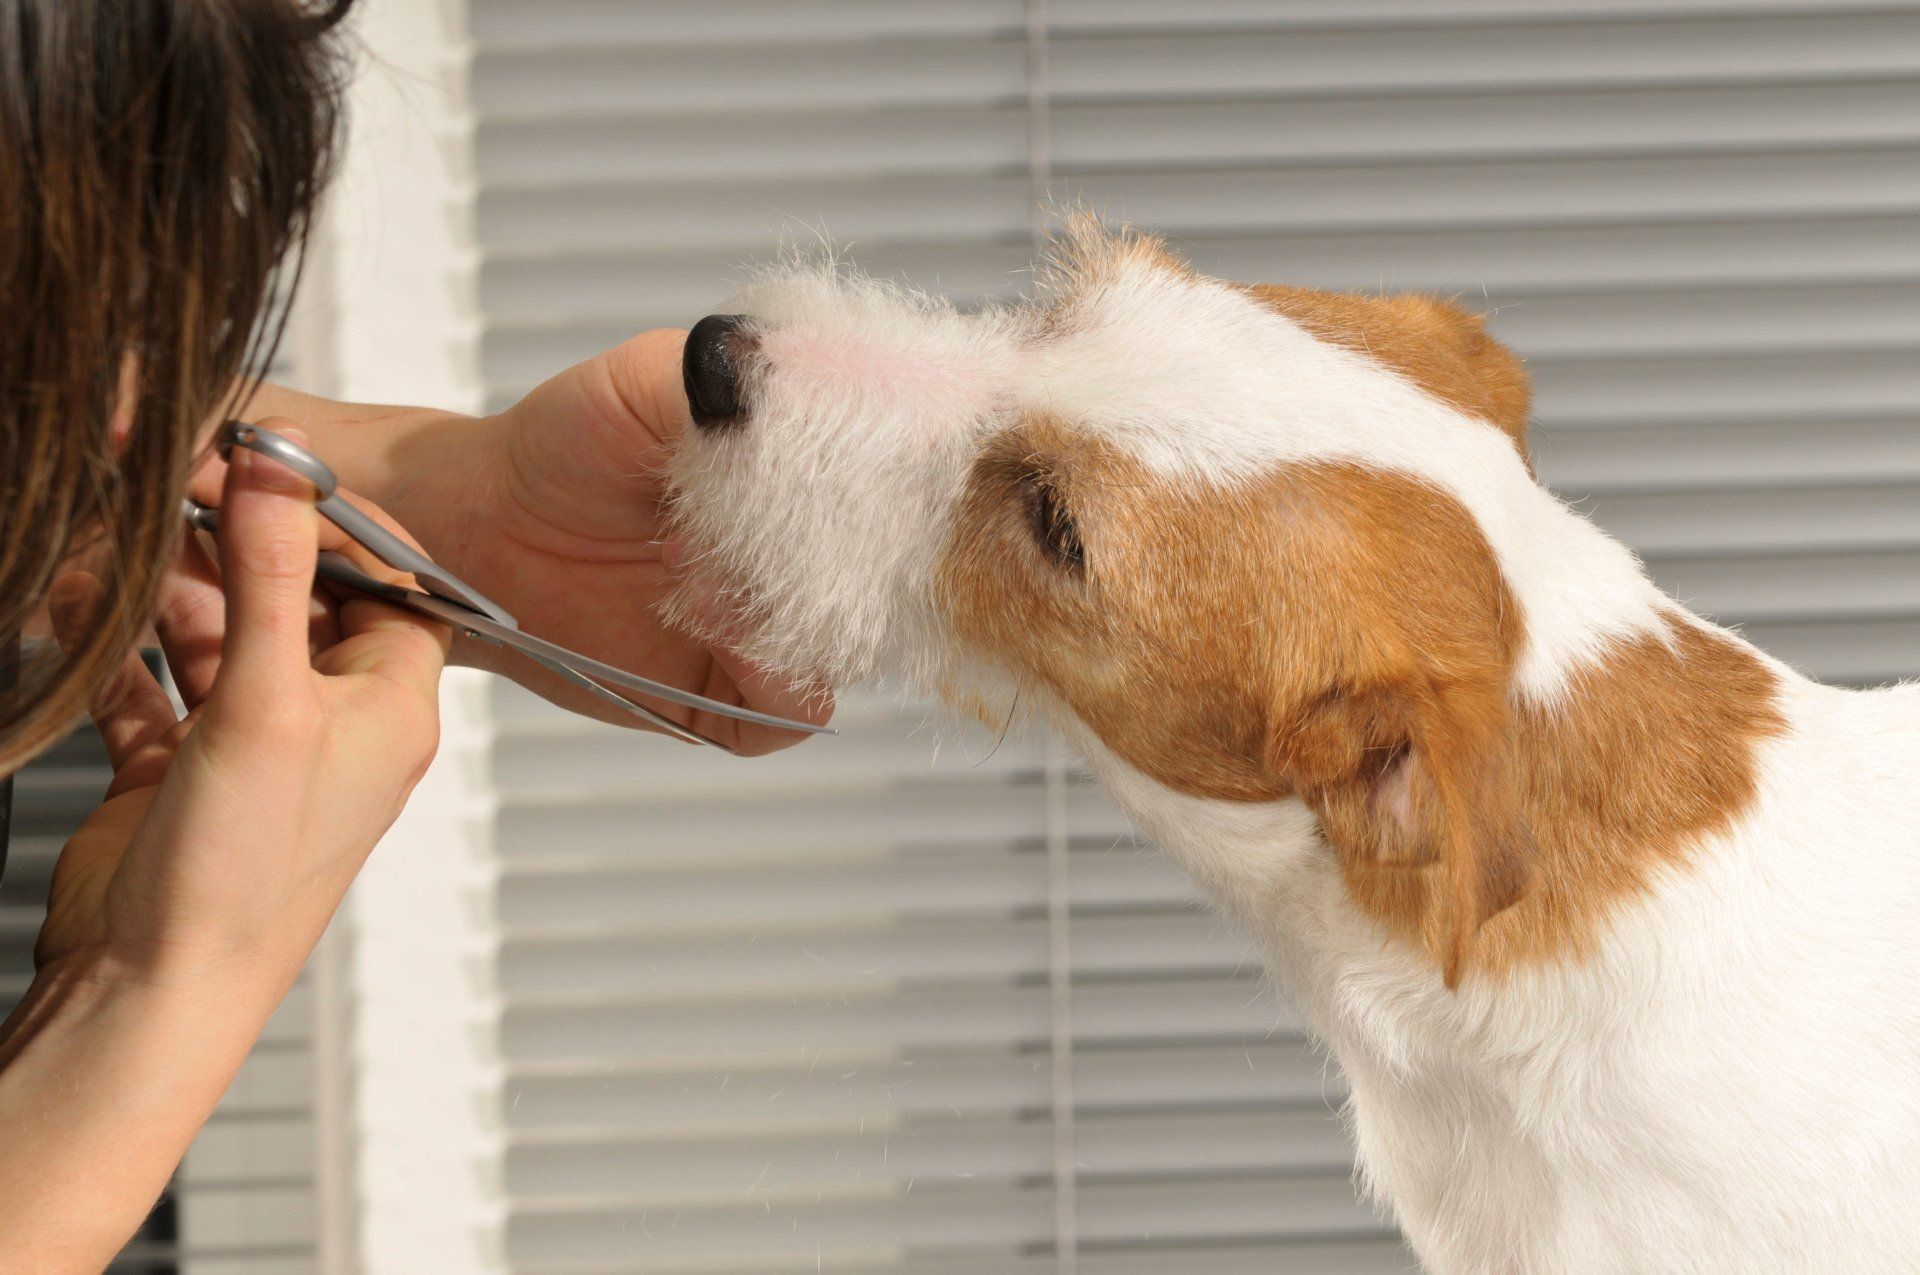 Groomer cutting the dog's hair